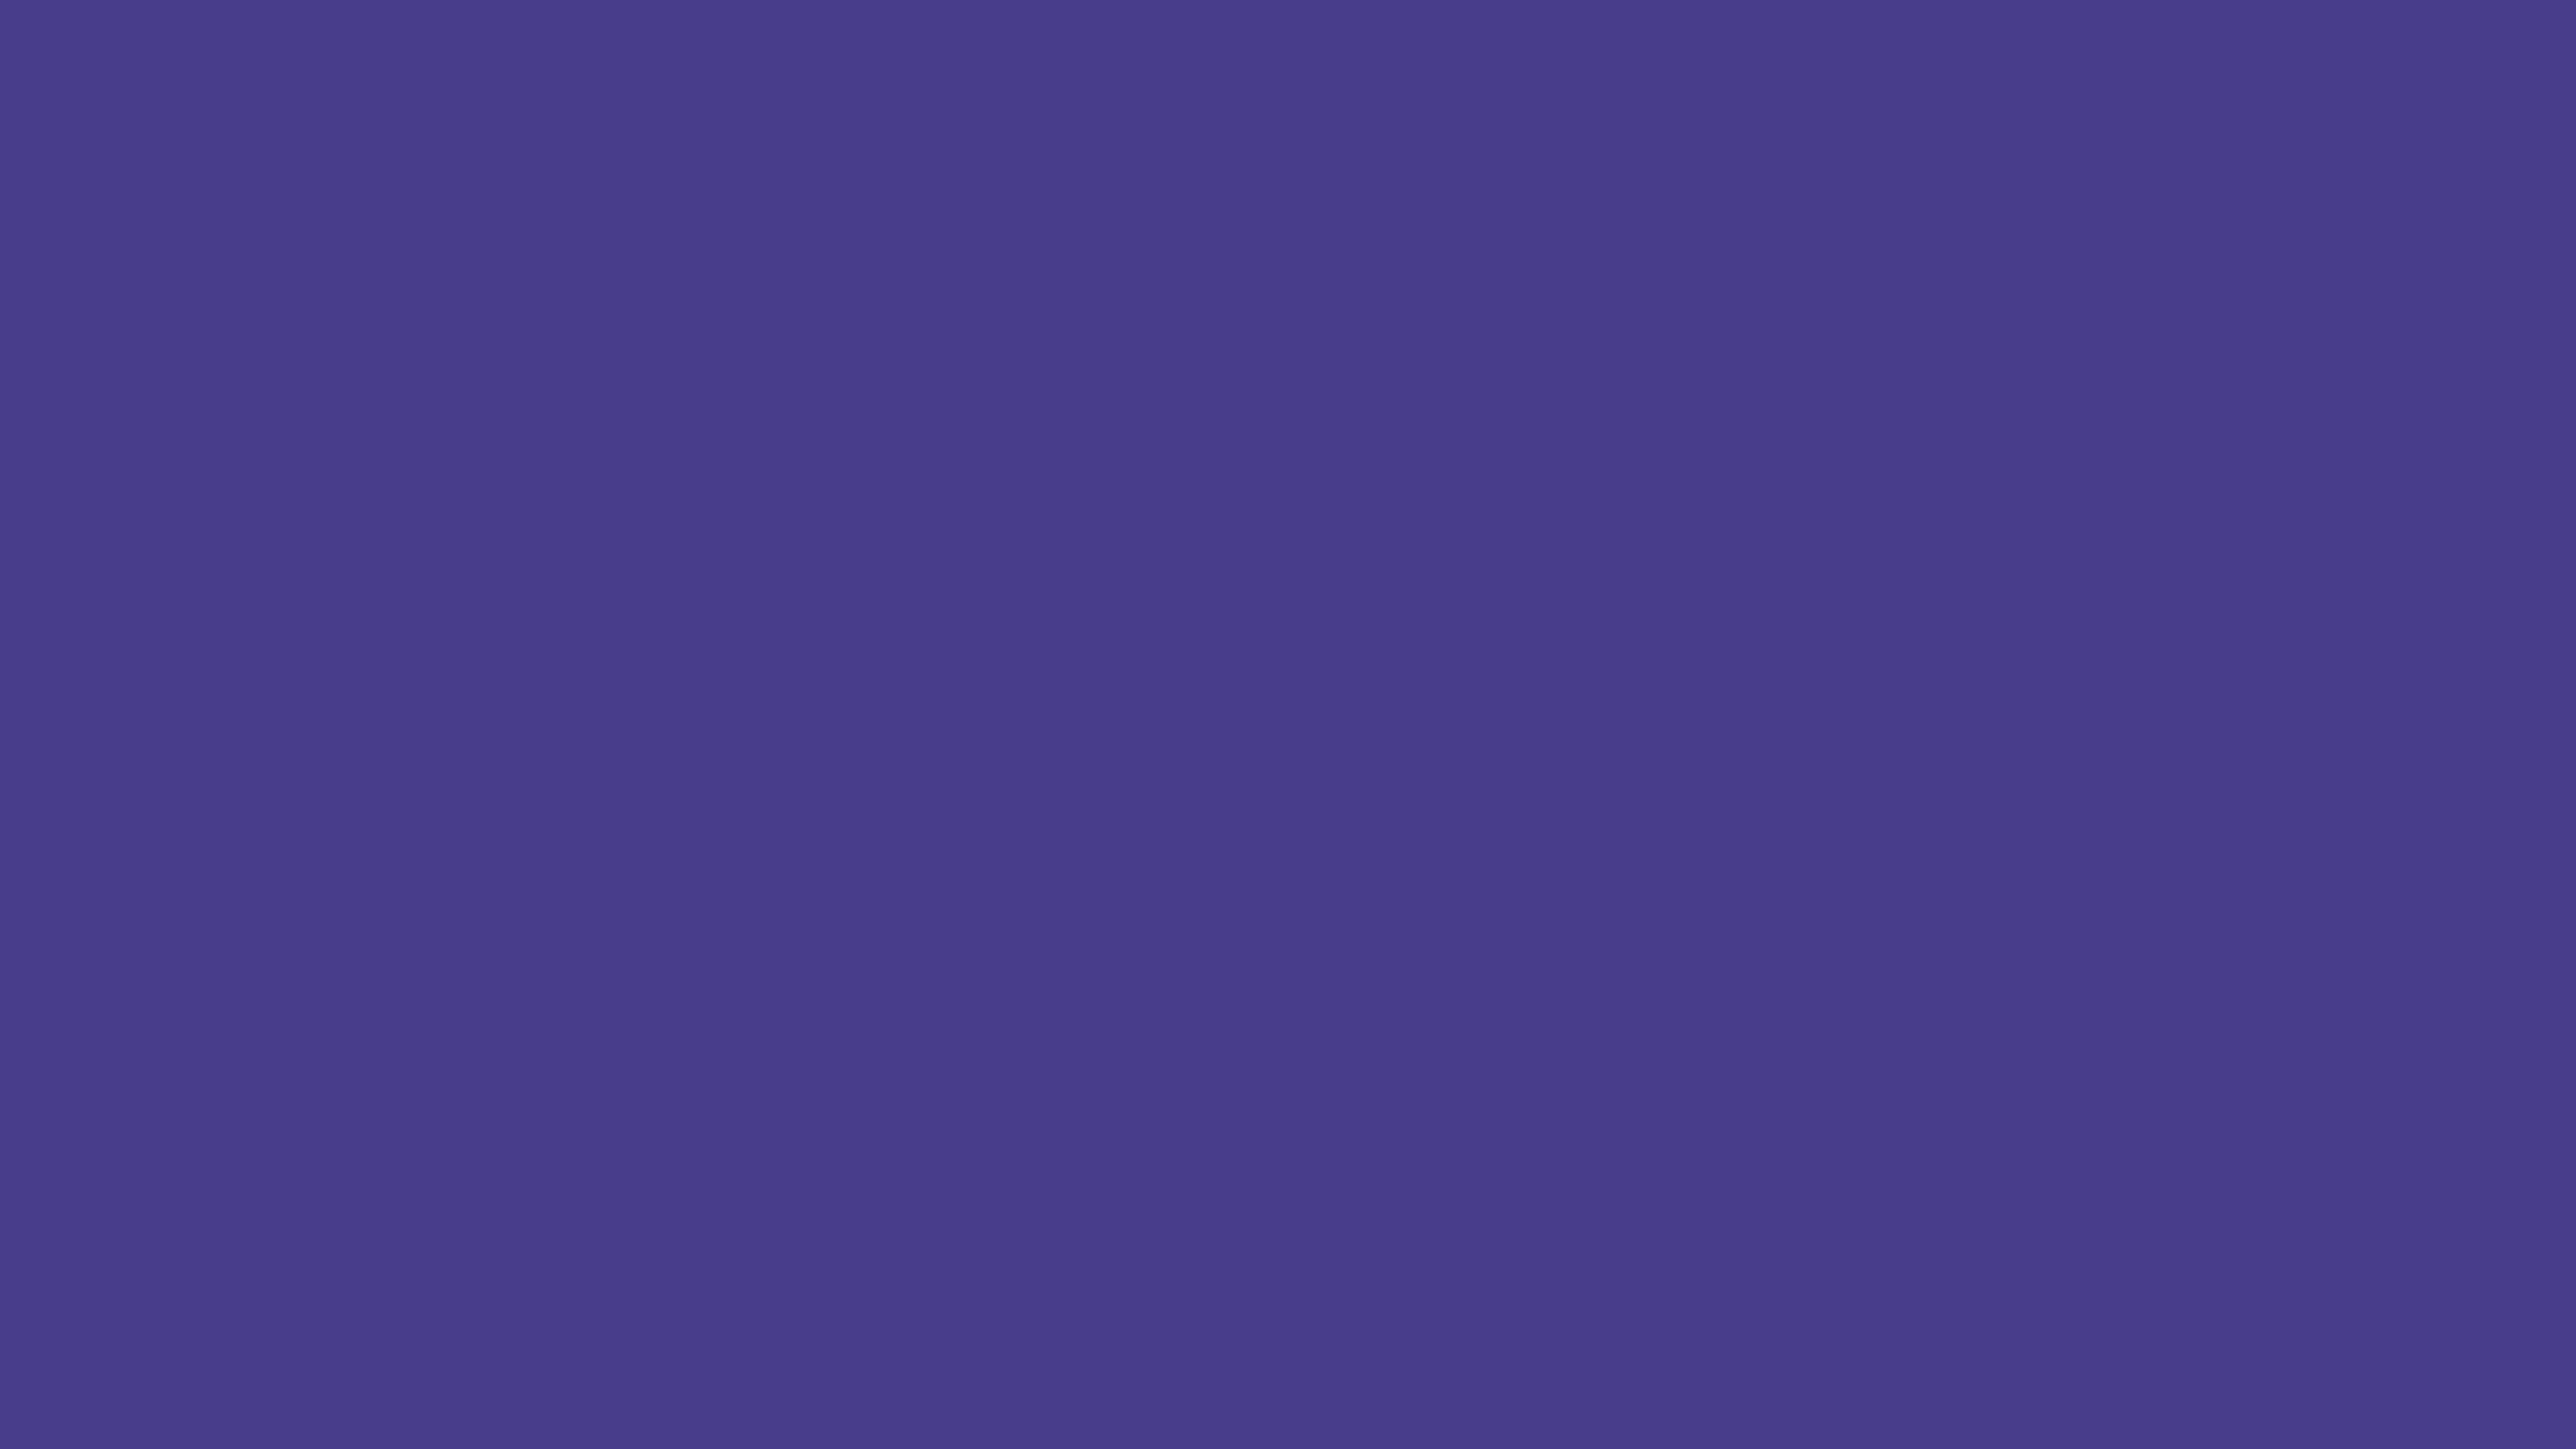 3840x2160 Dark Slate Blue Solid Color Background